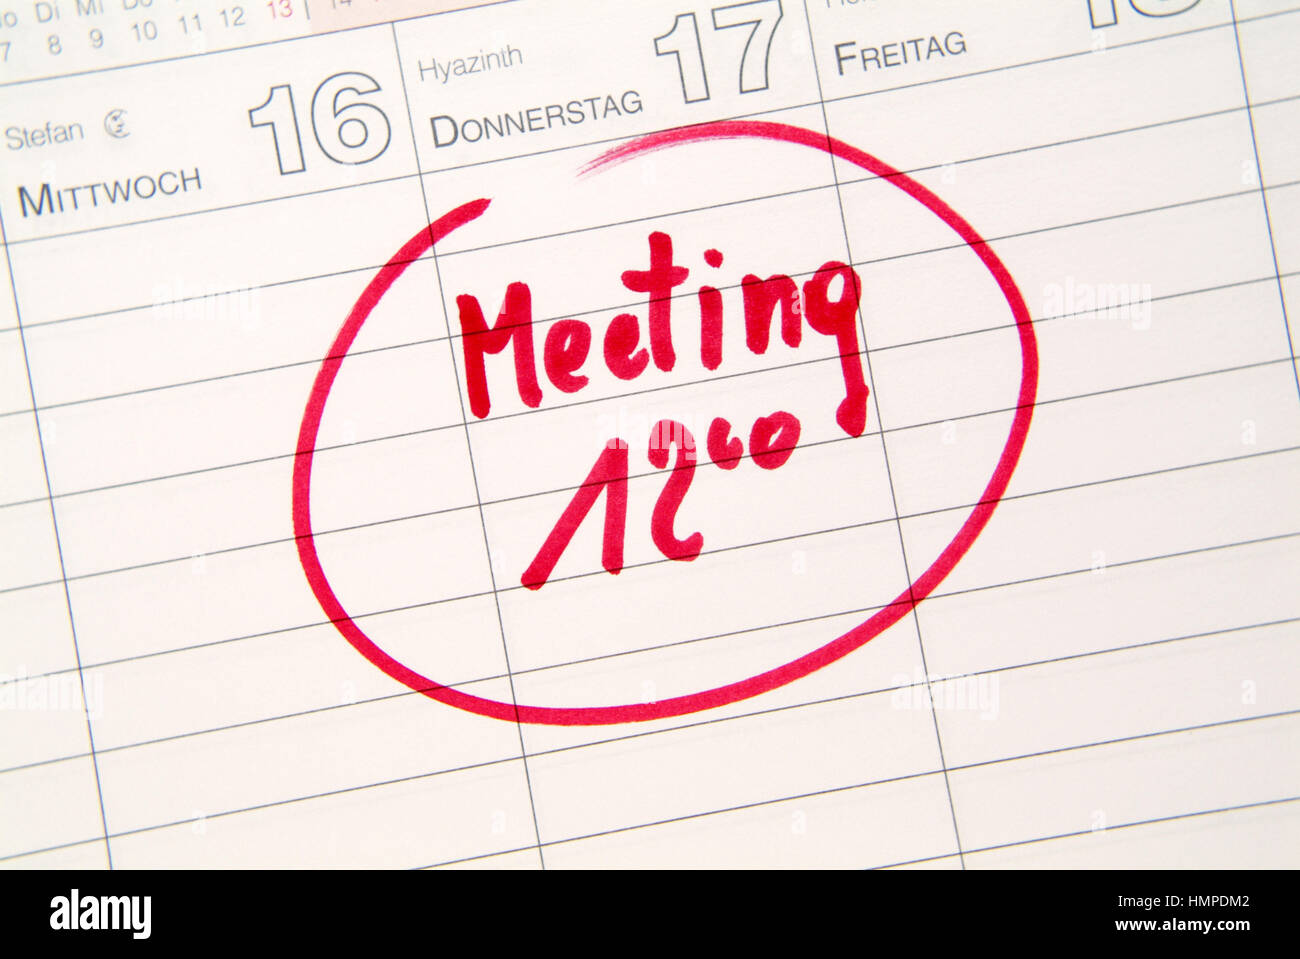 Meeting, notice on calendar Stock Photo